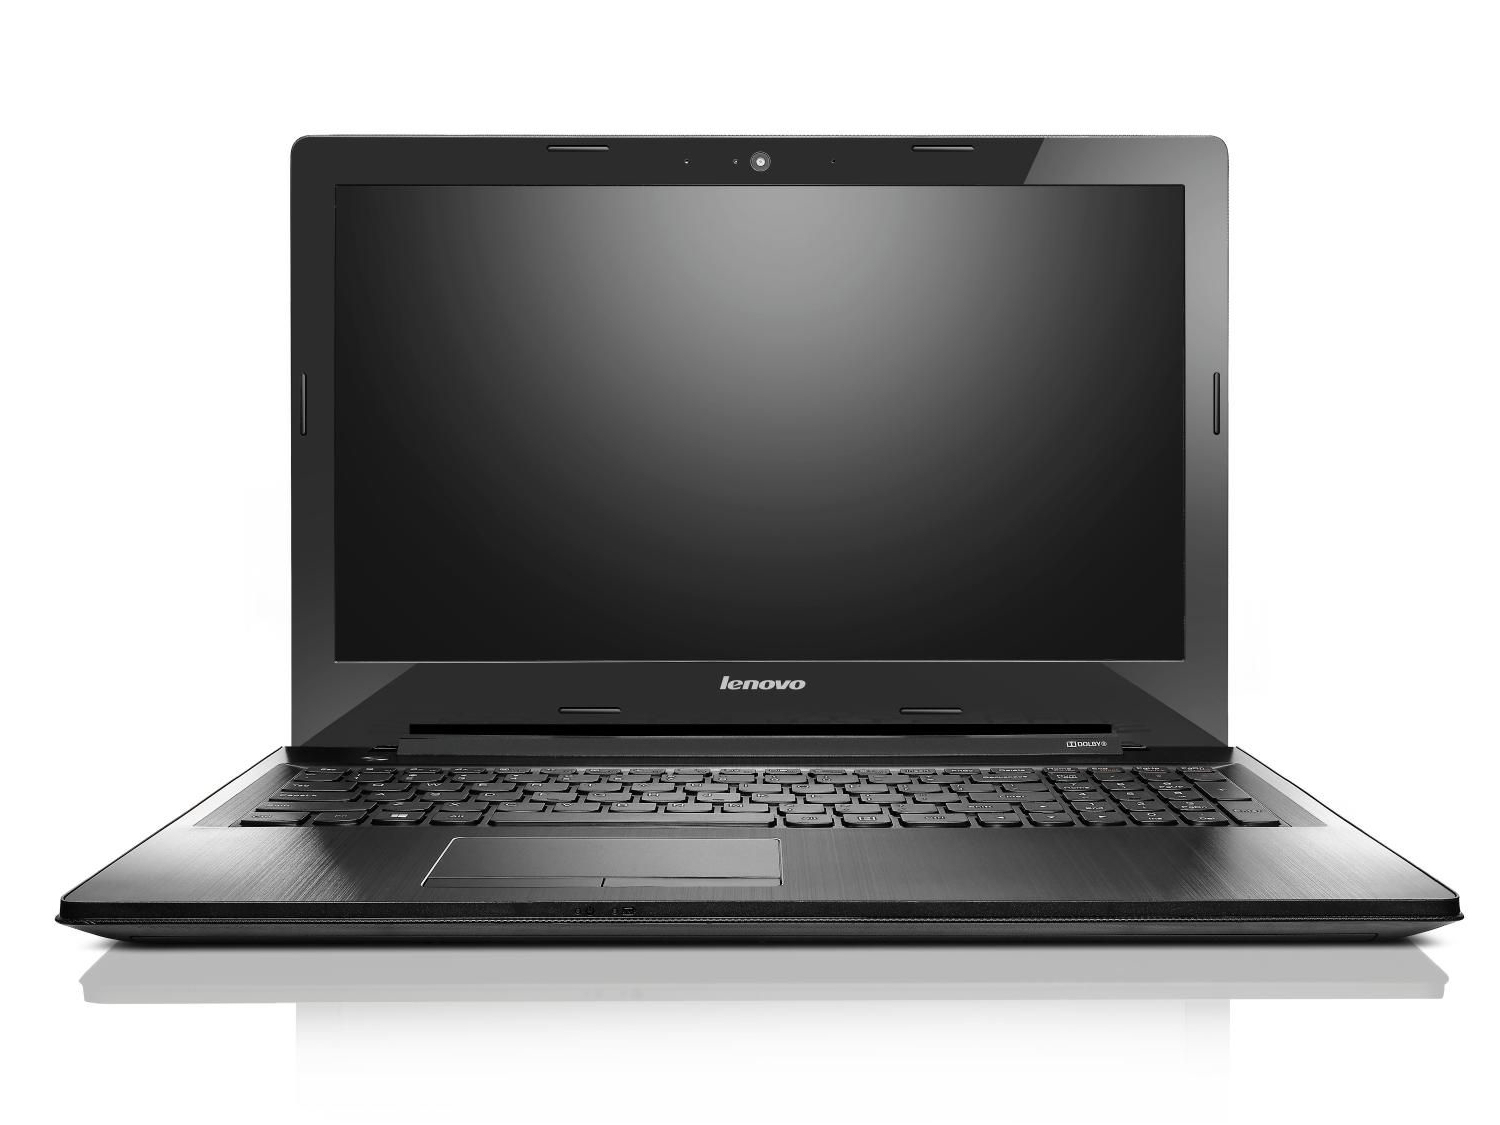 Laptop Lenovo Z50-70, Intel Core i5-4210U 1.70GHz, 4GB DDR3, 500GB SATA, DVD-RW, 15.6 Inch, Tastatura Numerica, Webcam